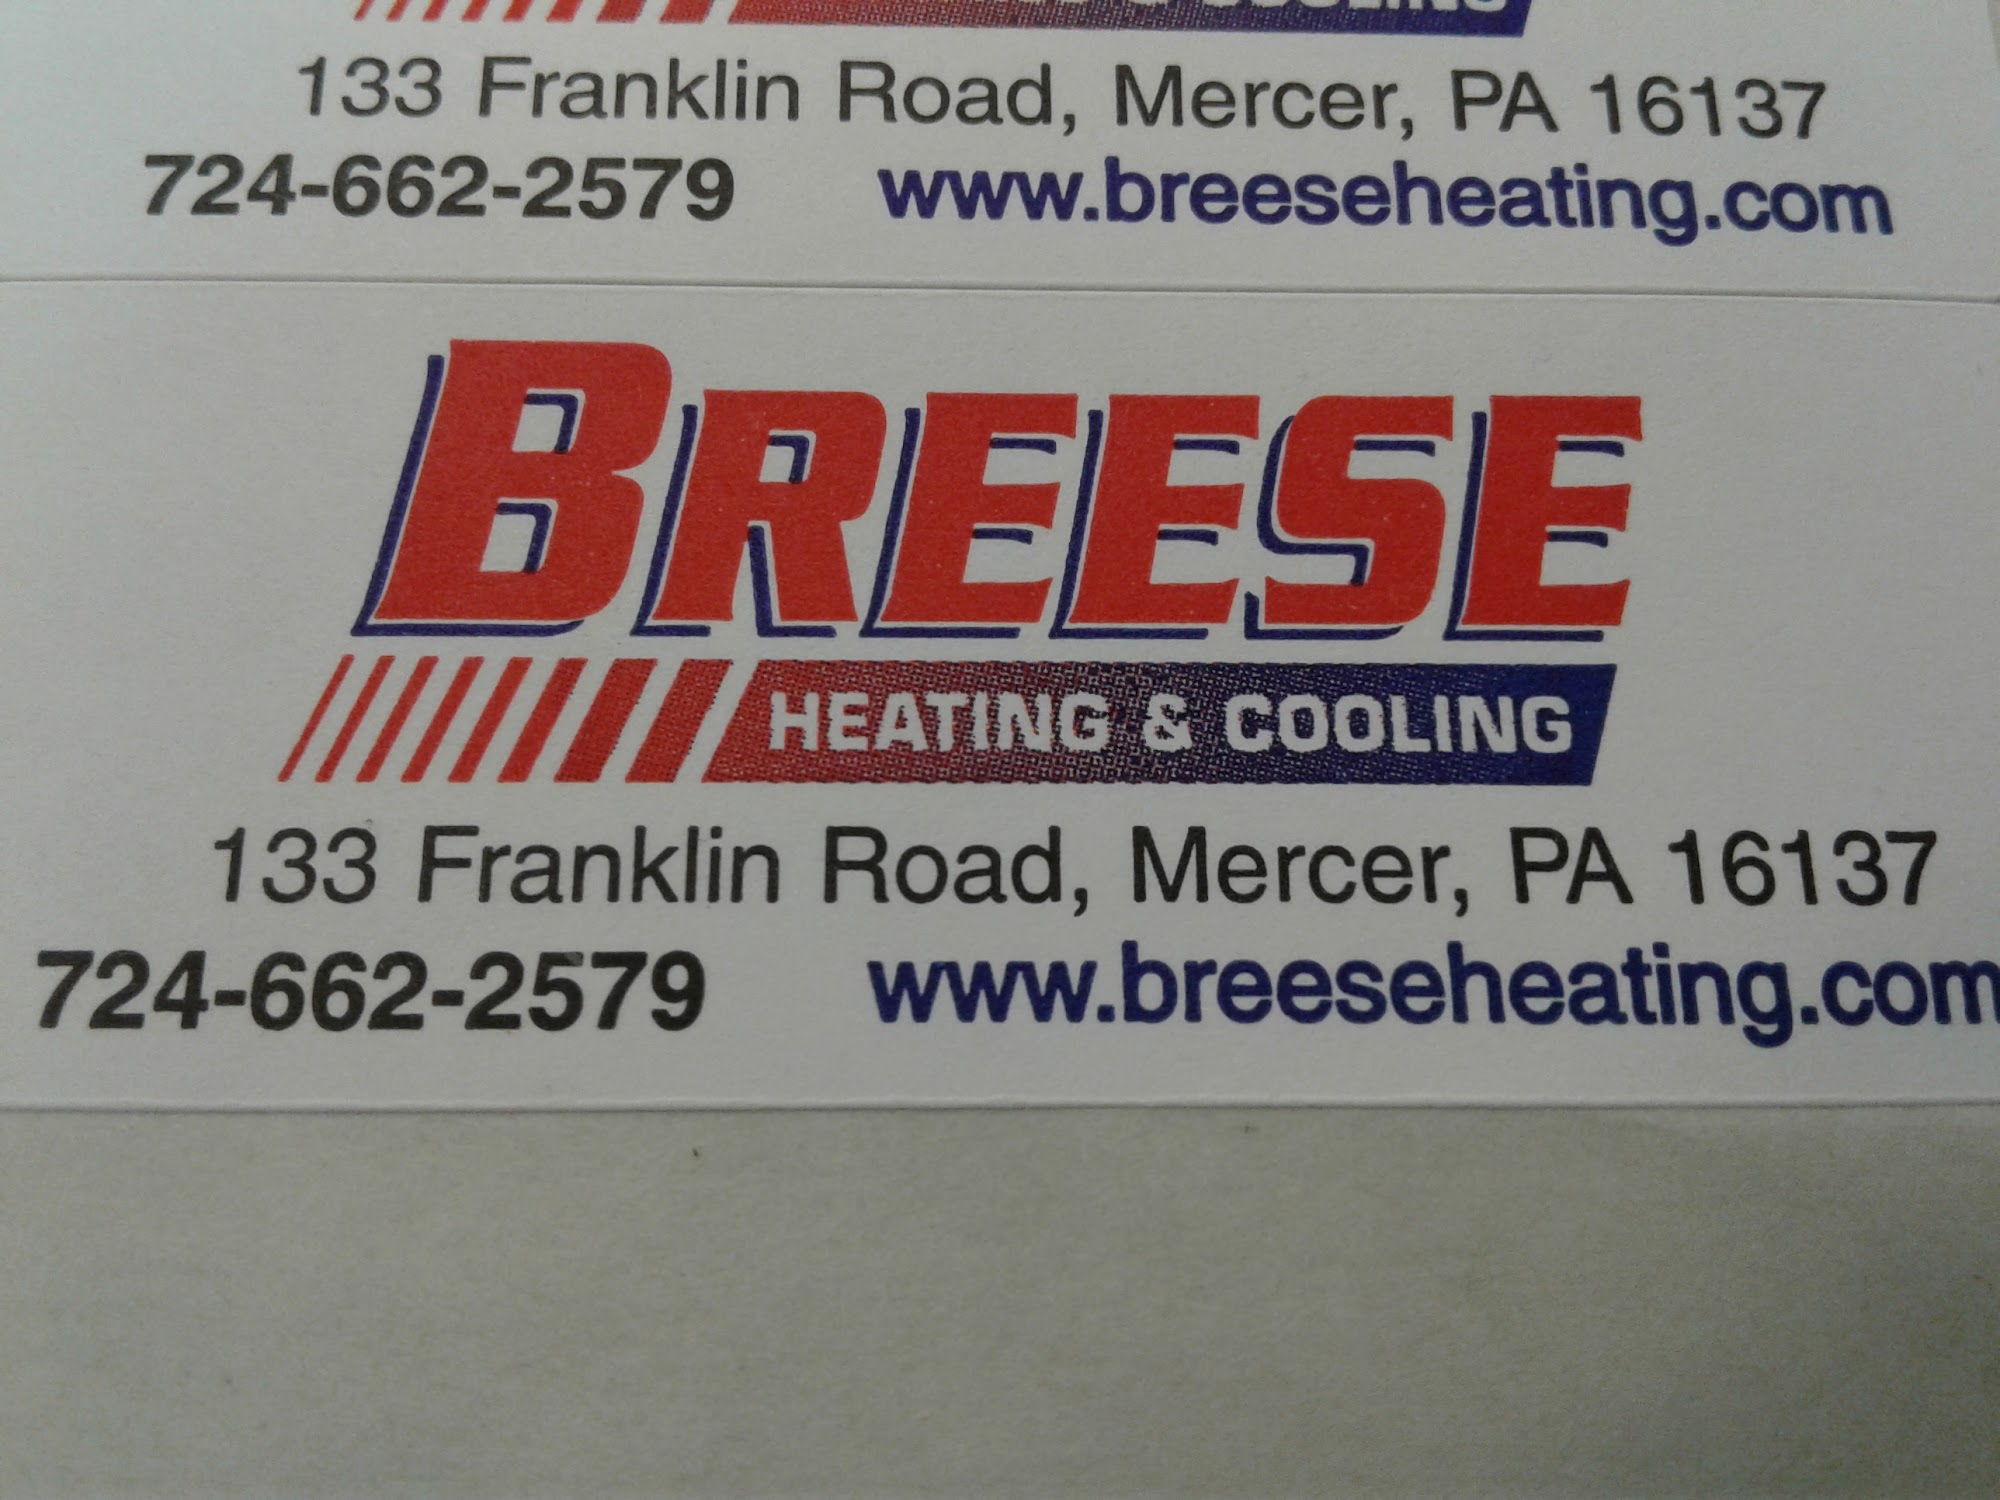 Breese Heating & Cooling 133 Franklin Rd, Mercer Pennsylvania 16137